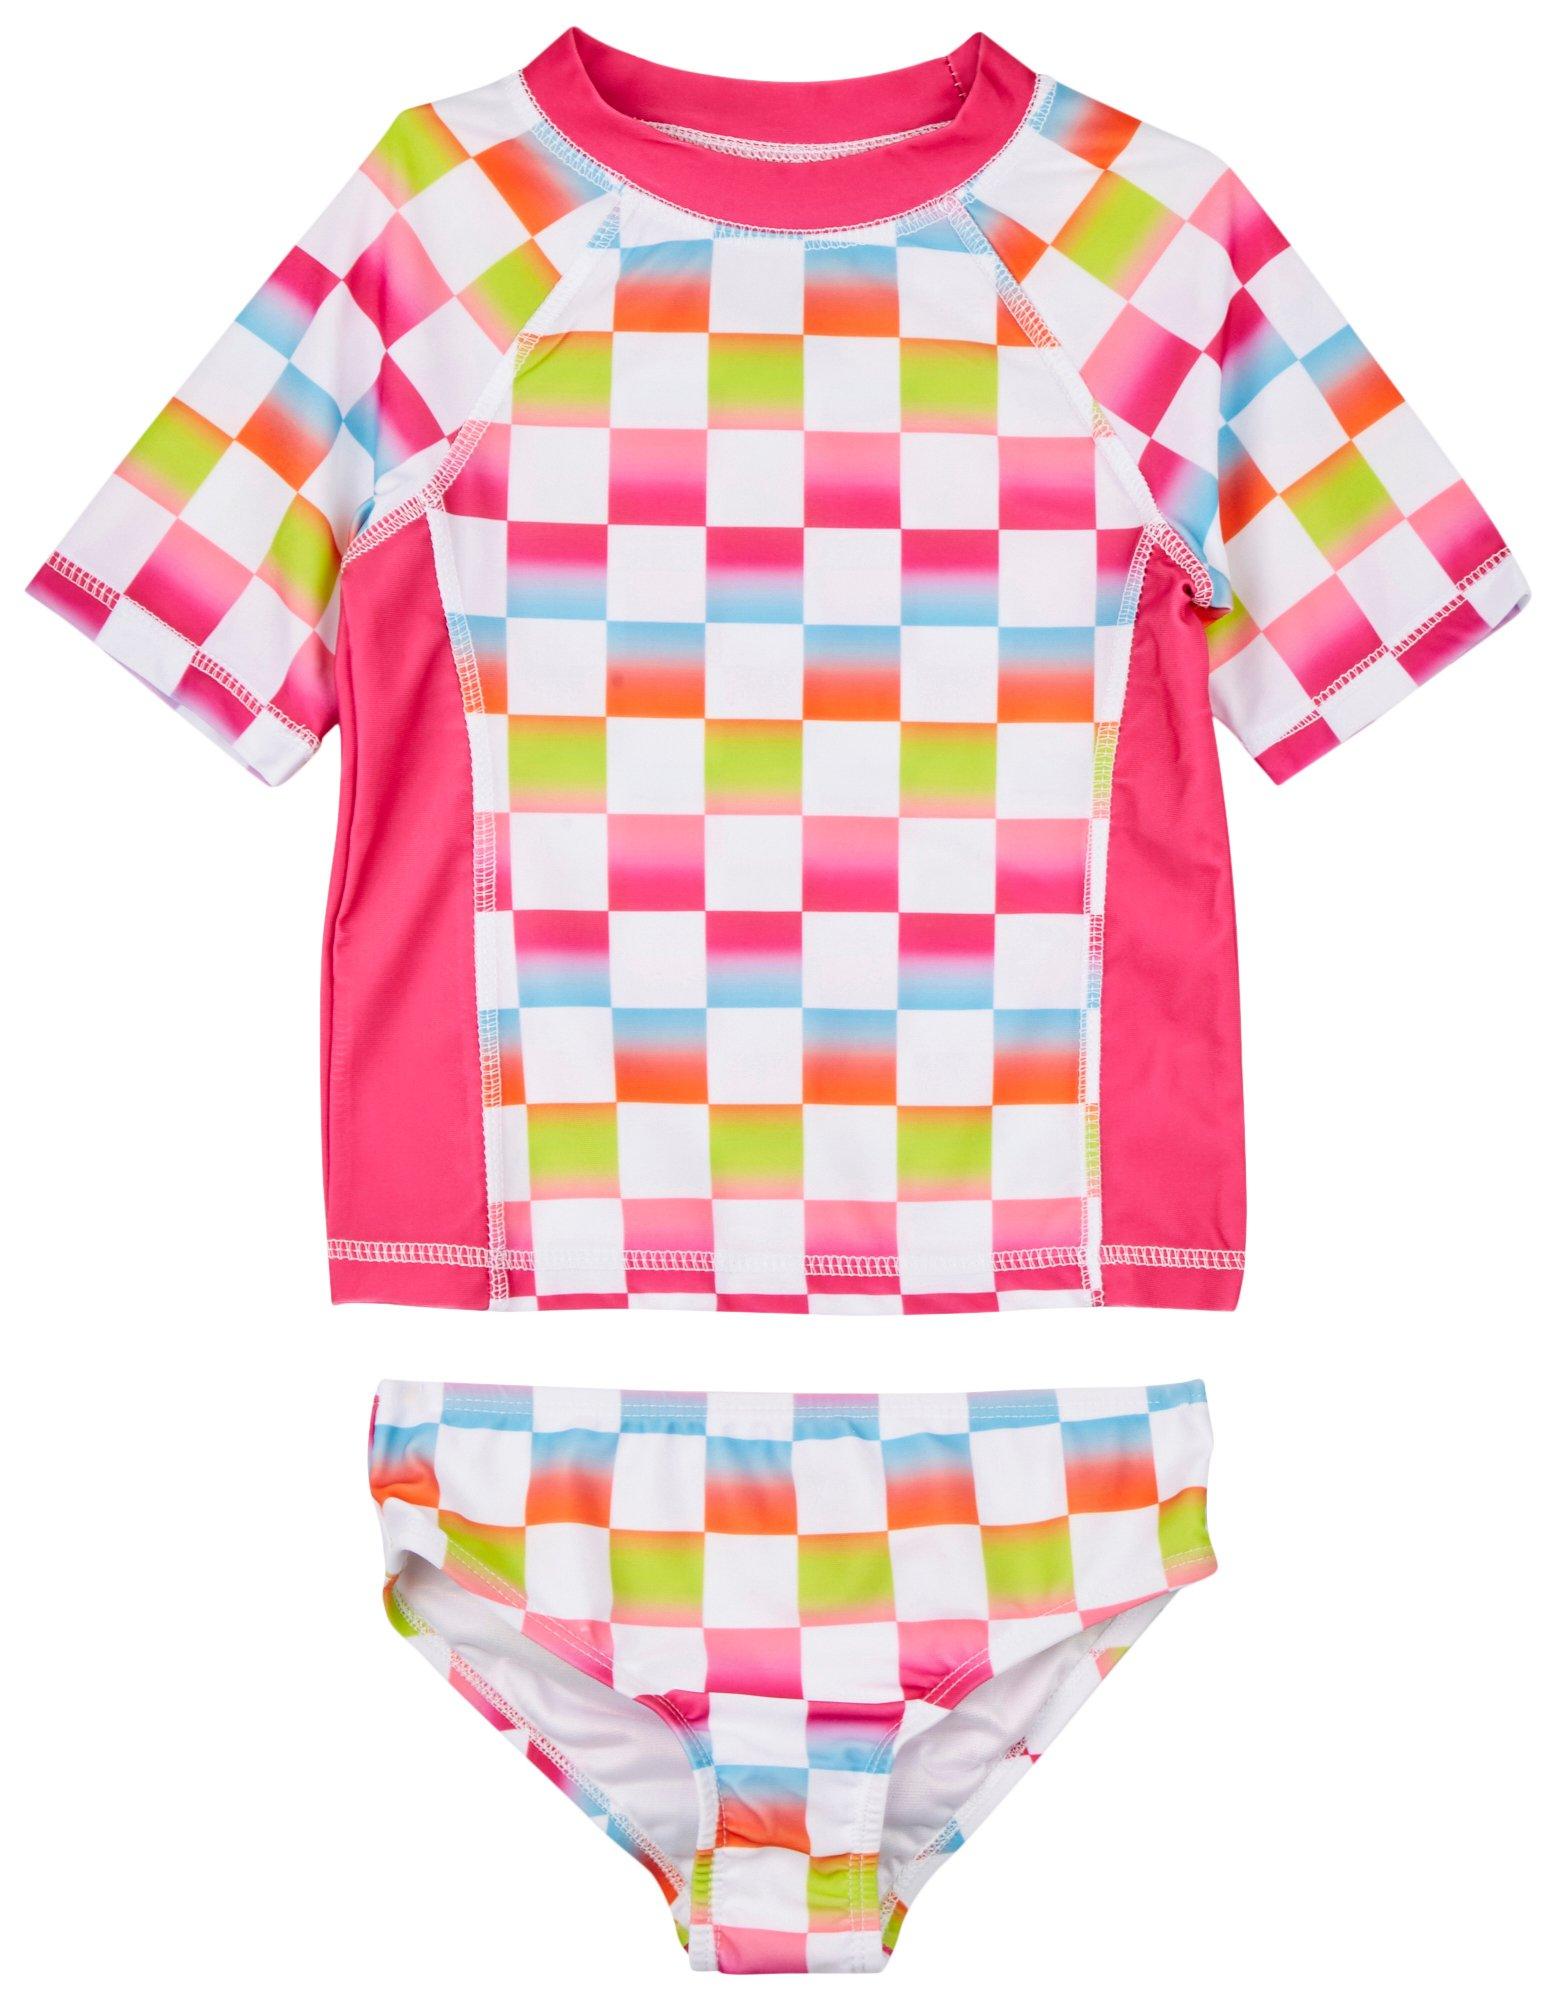 Little Grls 2-pc. Pink Checkered Swimsuit Set